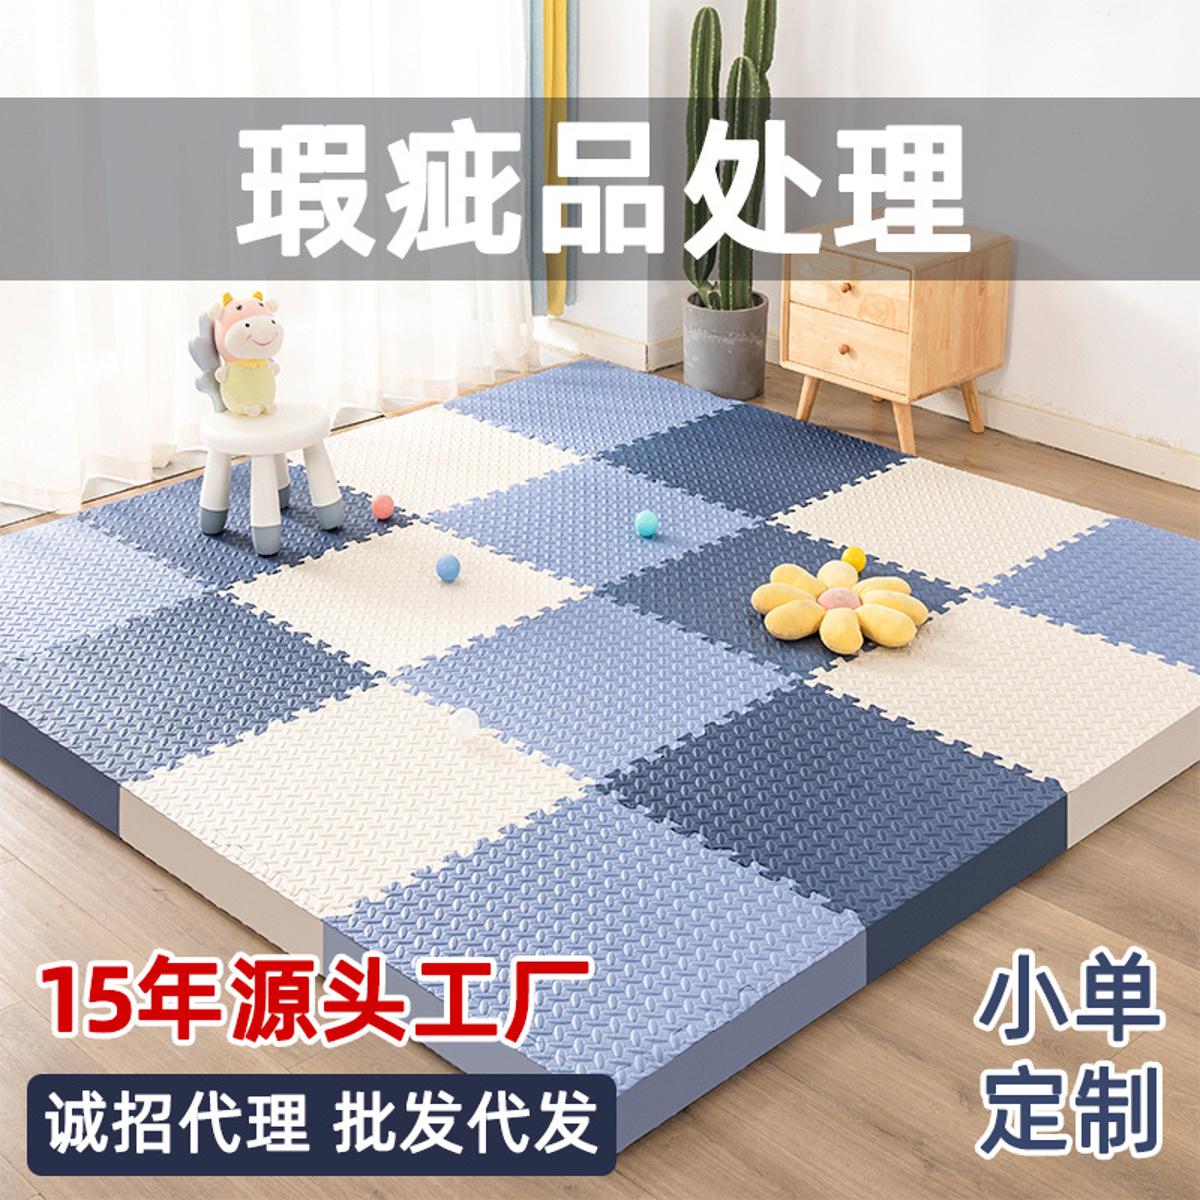 EVA Tatami Puzzle Mat at Rs 100/square feet